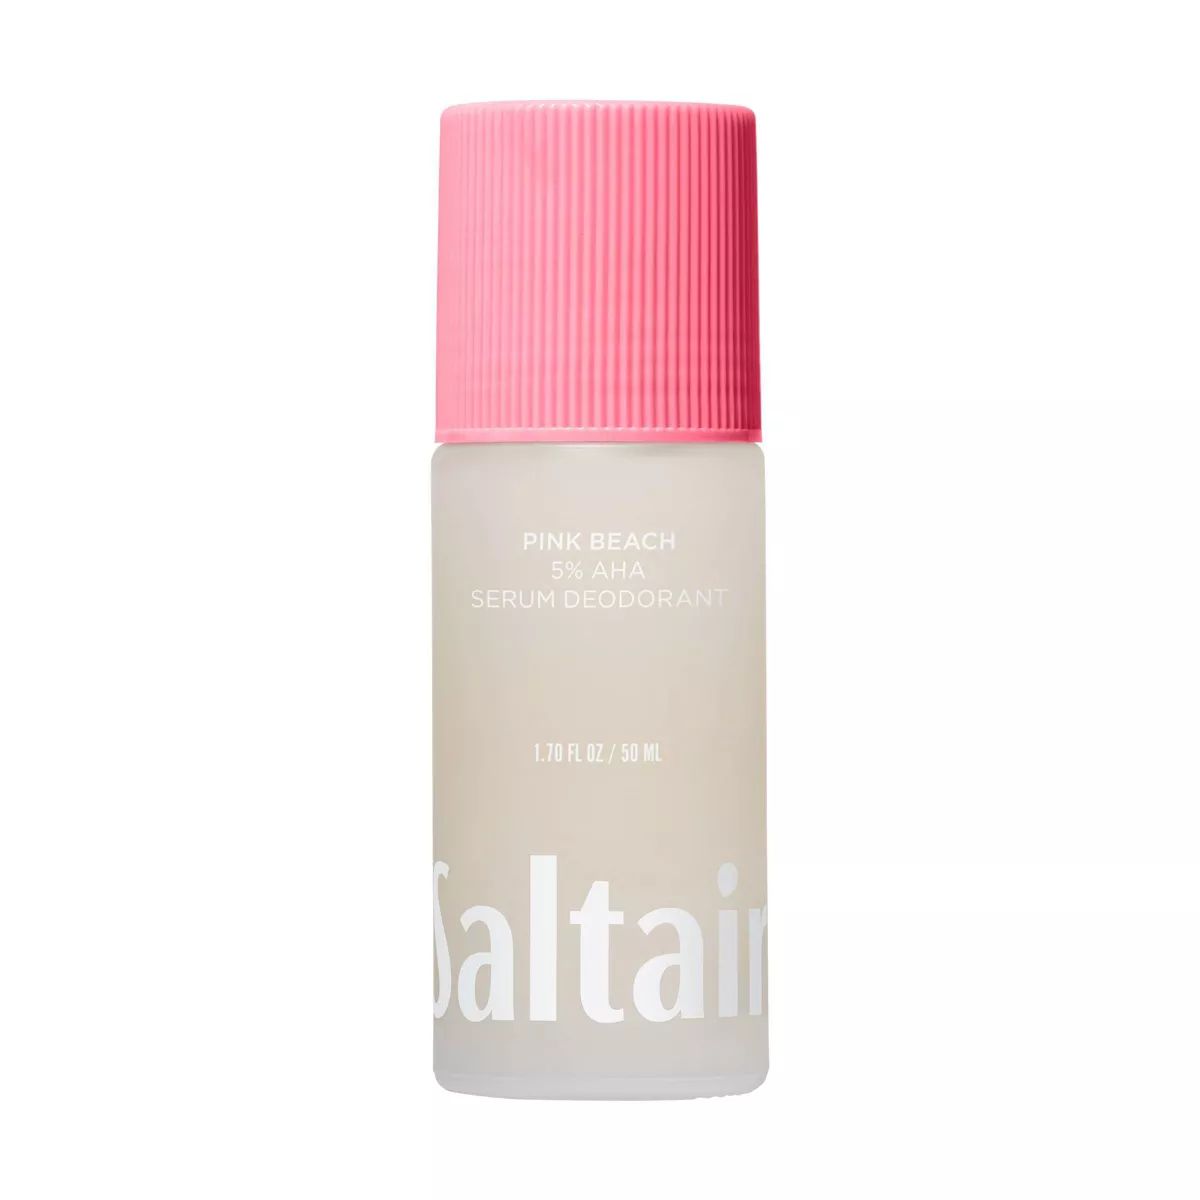 Saltair Pink Beach Serum Deodorant - 5% AHA - 1.7 fl oz | Target